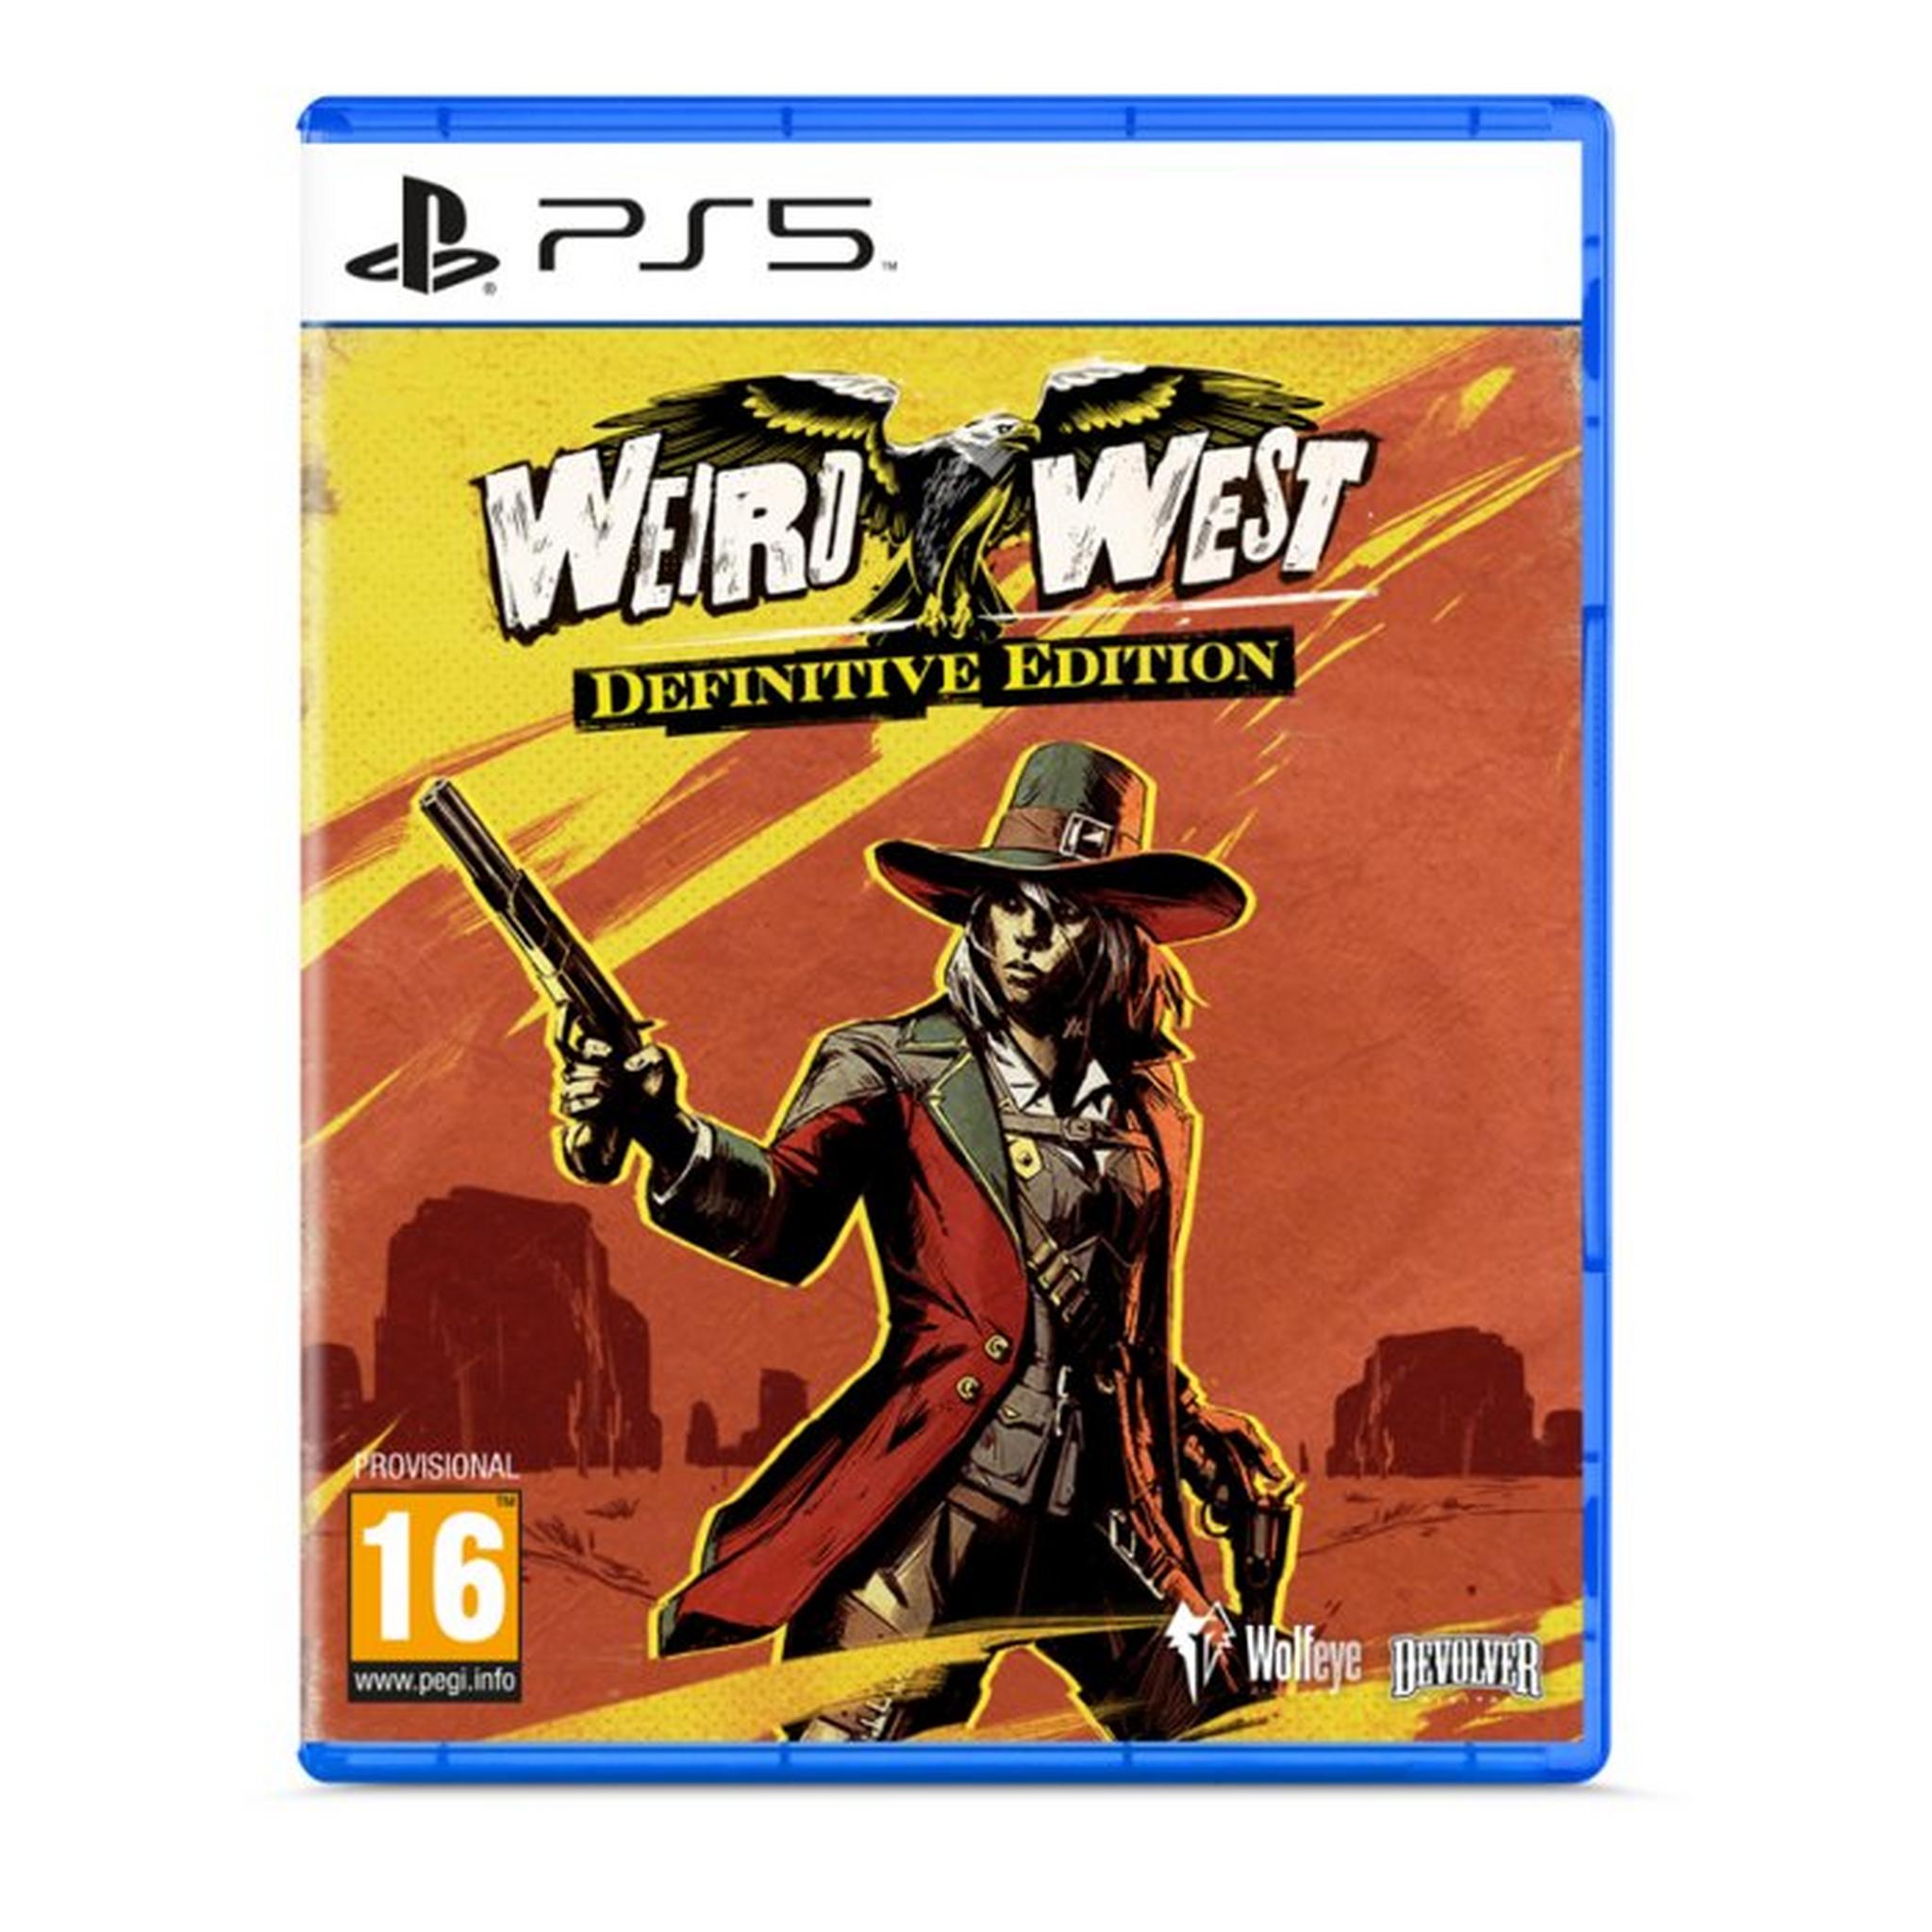 Wolfeye Studios Weird West Game Definitive Edition for Playstation 5